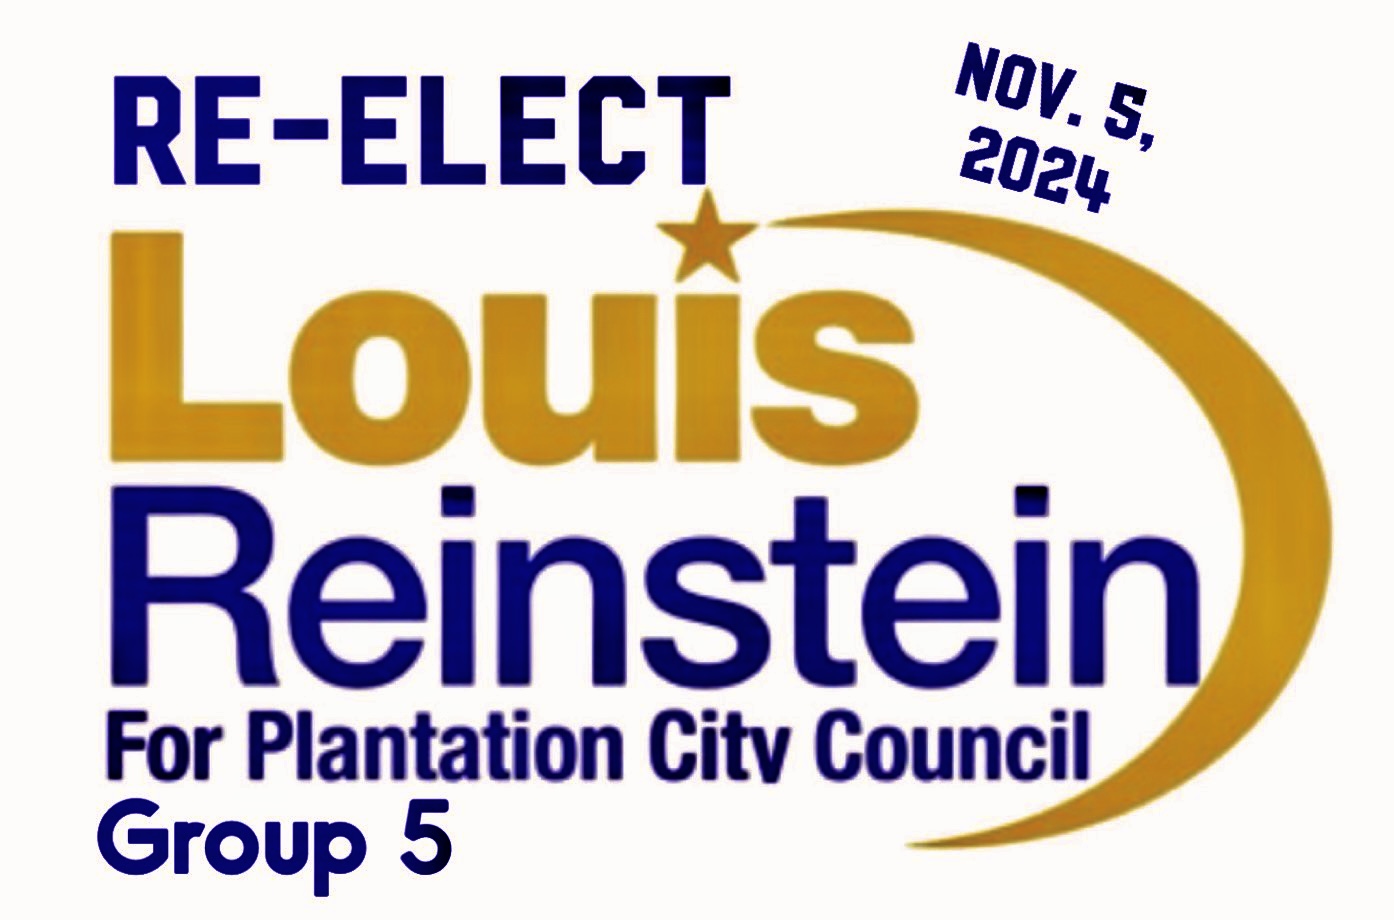 RE-ELECT LOUIS REINSTEIN, PLANTATION CITY COUNCIL, GROUP 5, NON-PARTISAN